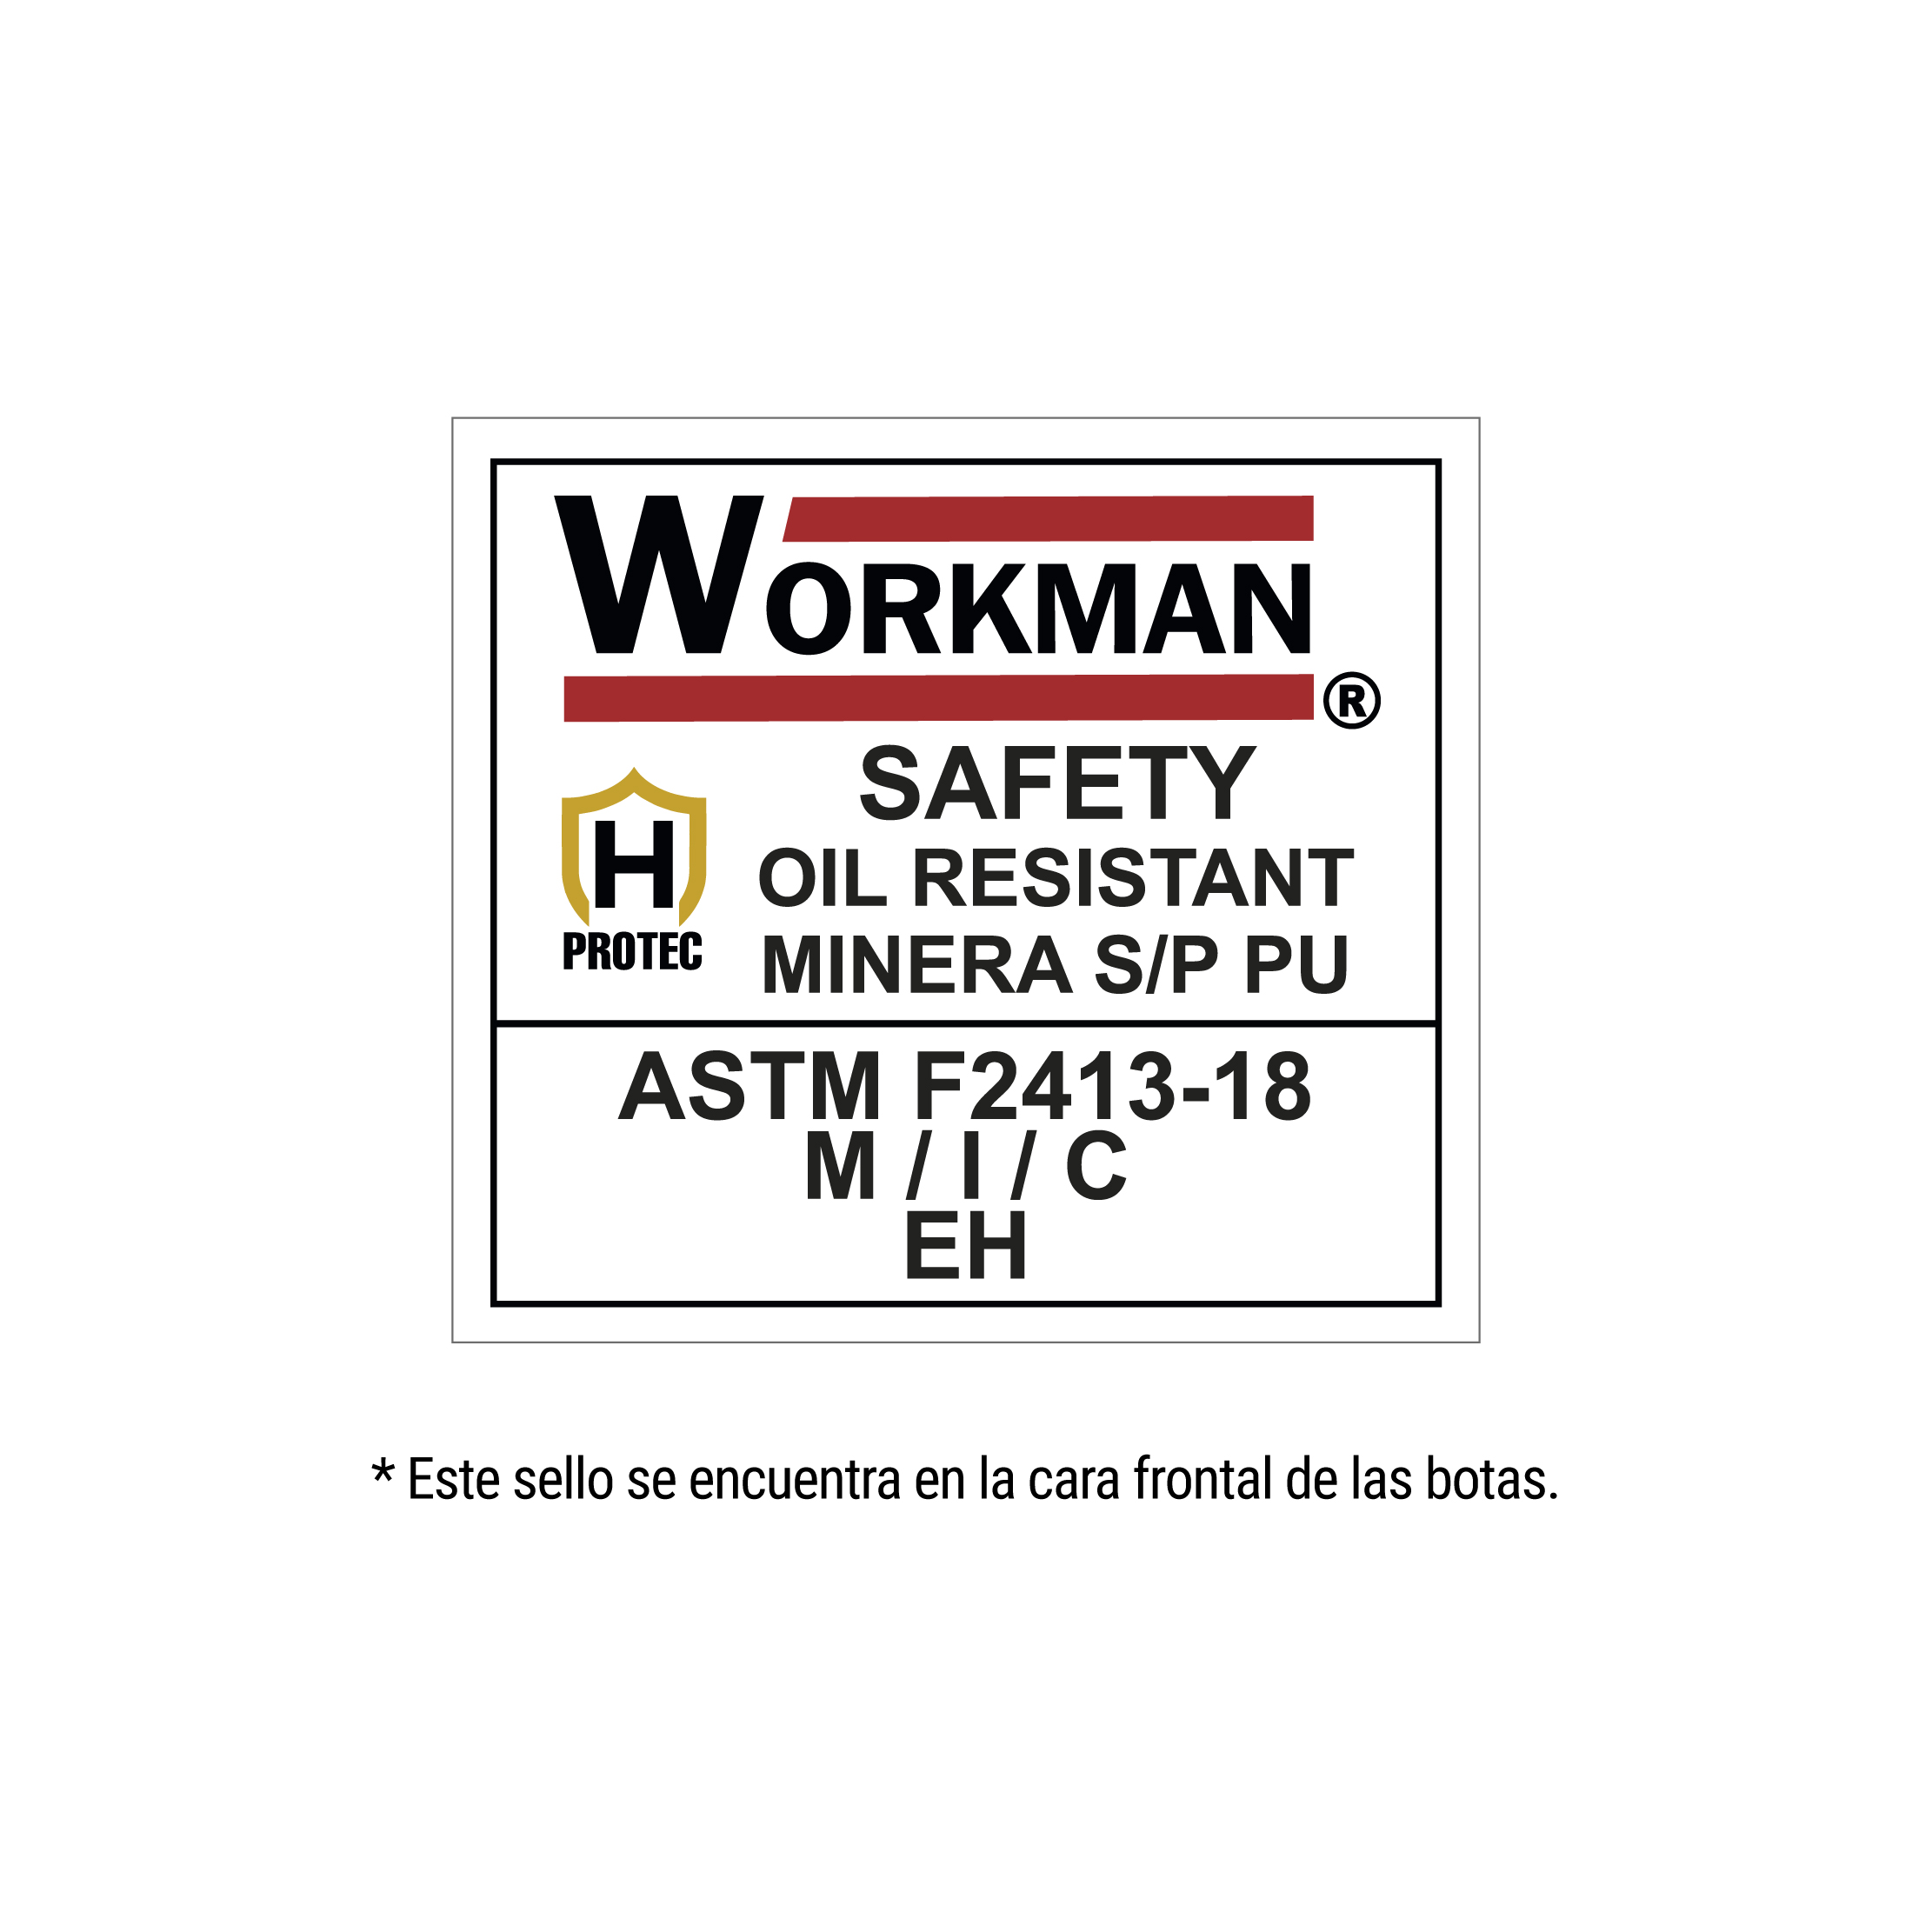 Workman Safety Oil Resistant Minera S/P PU Amarilla